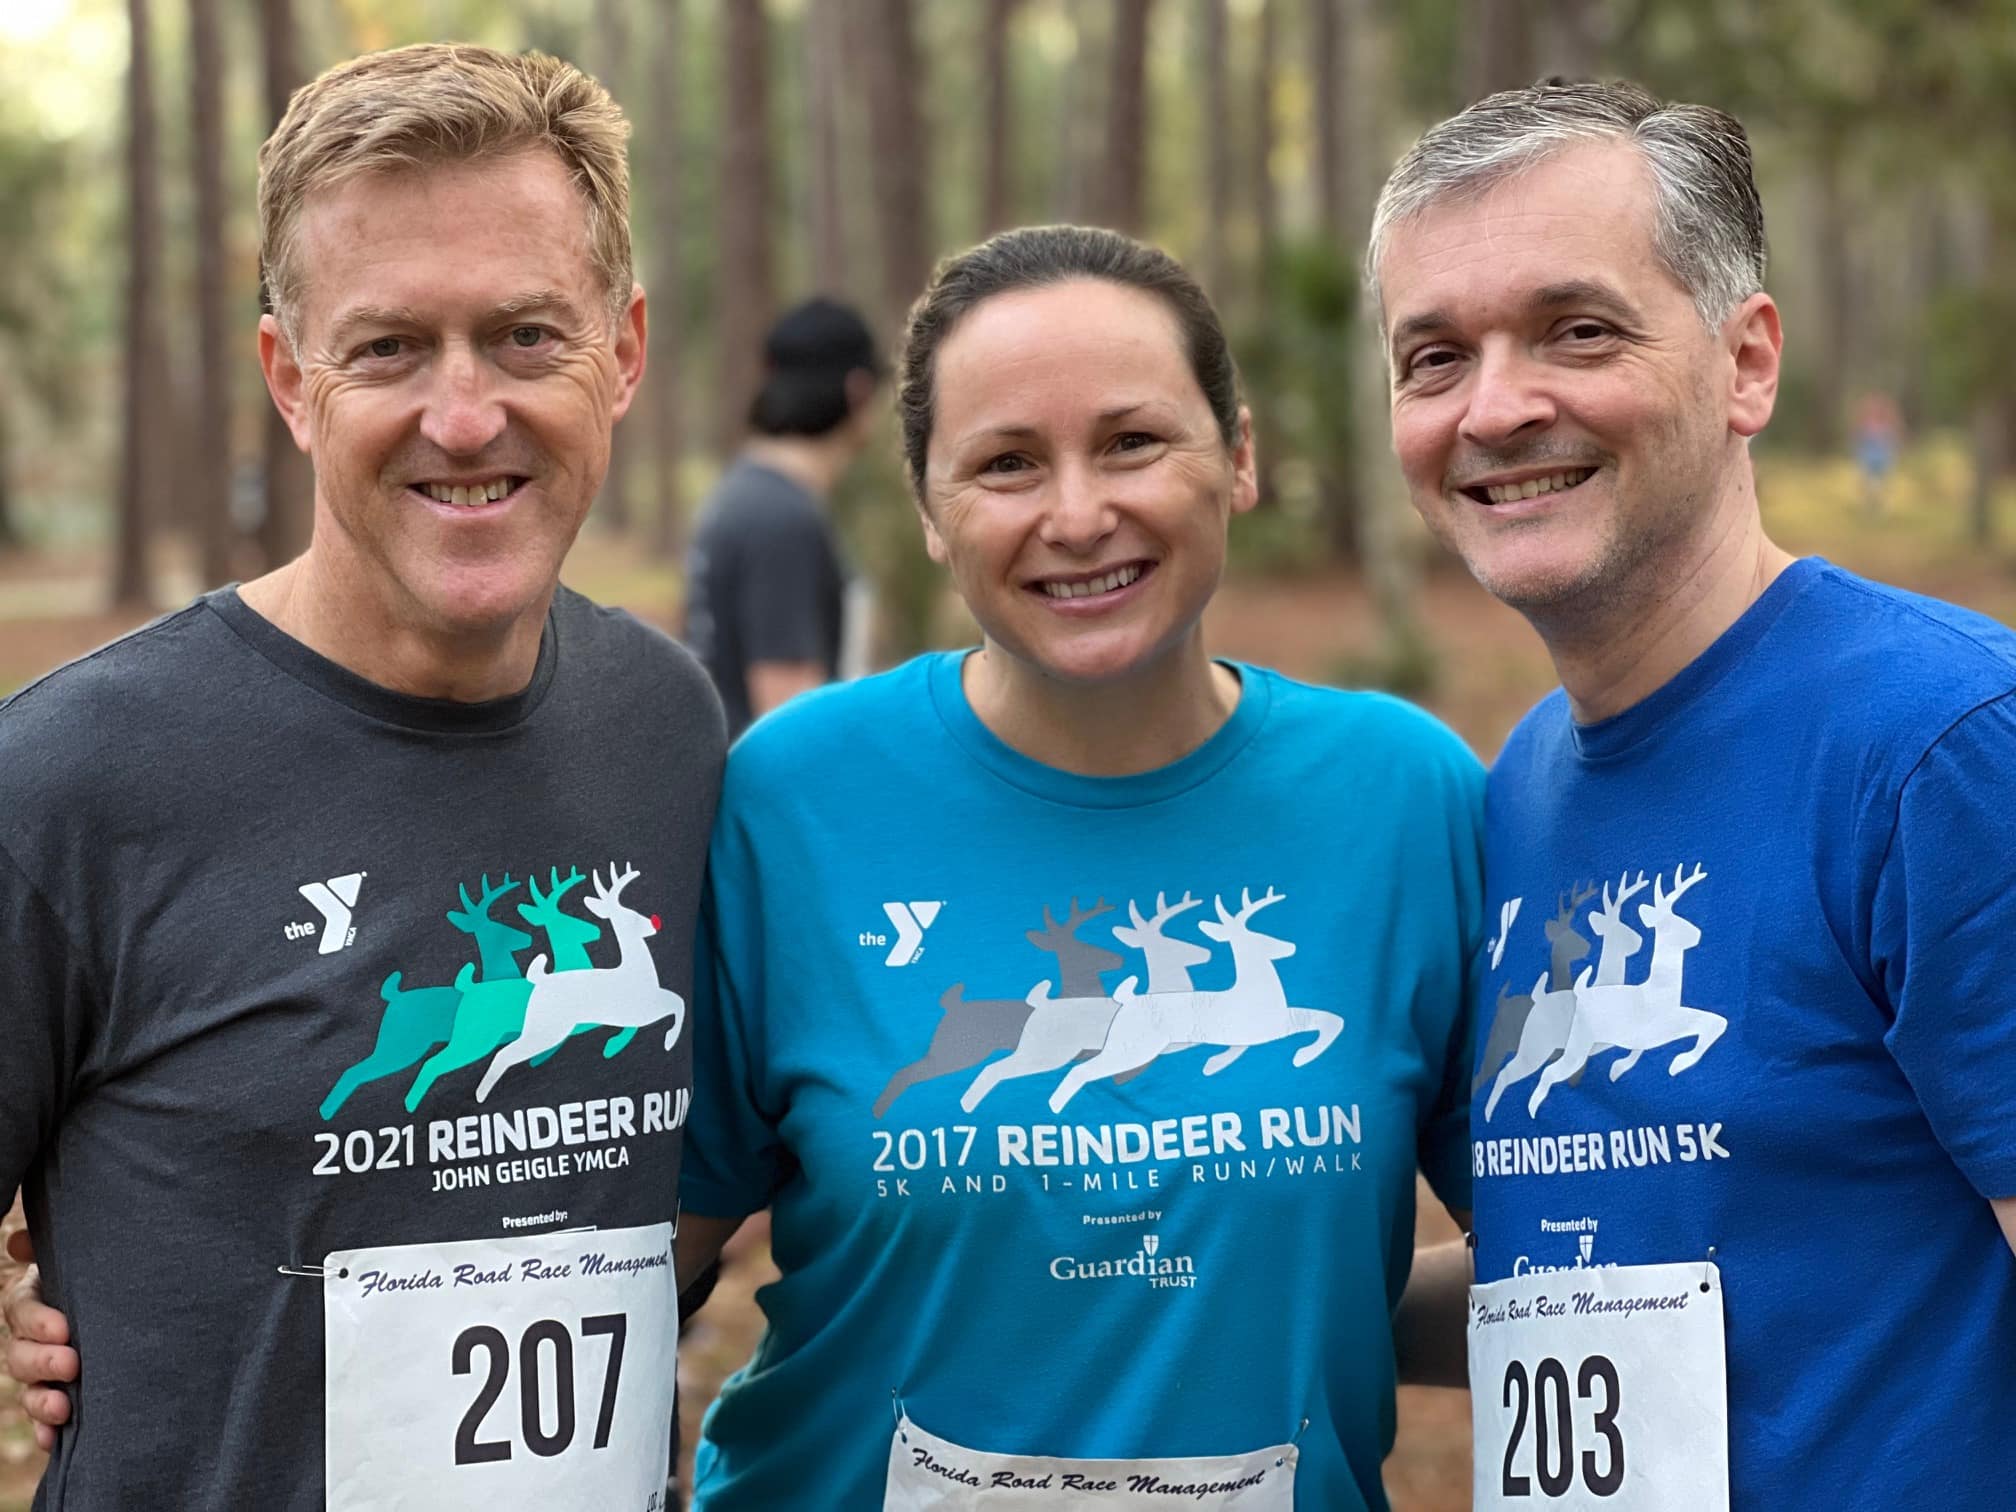 Reindeer Run 2021